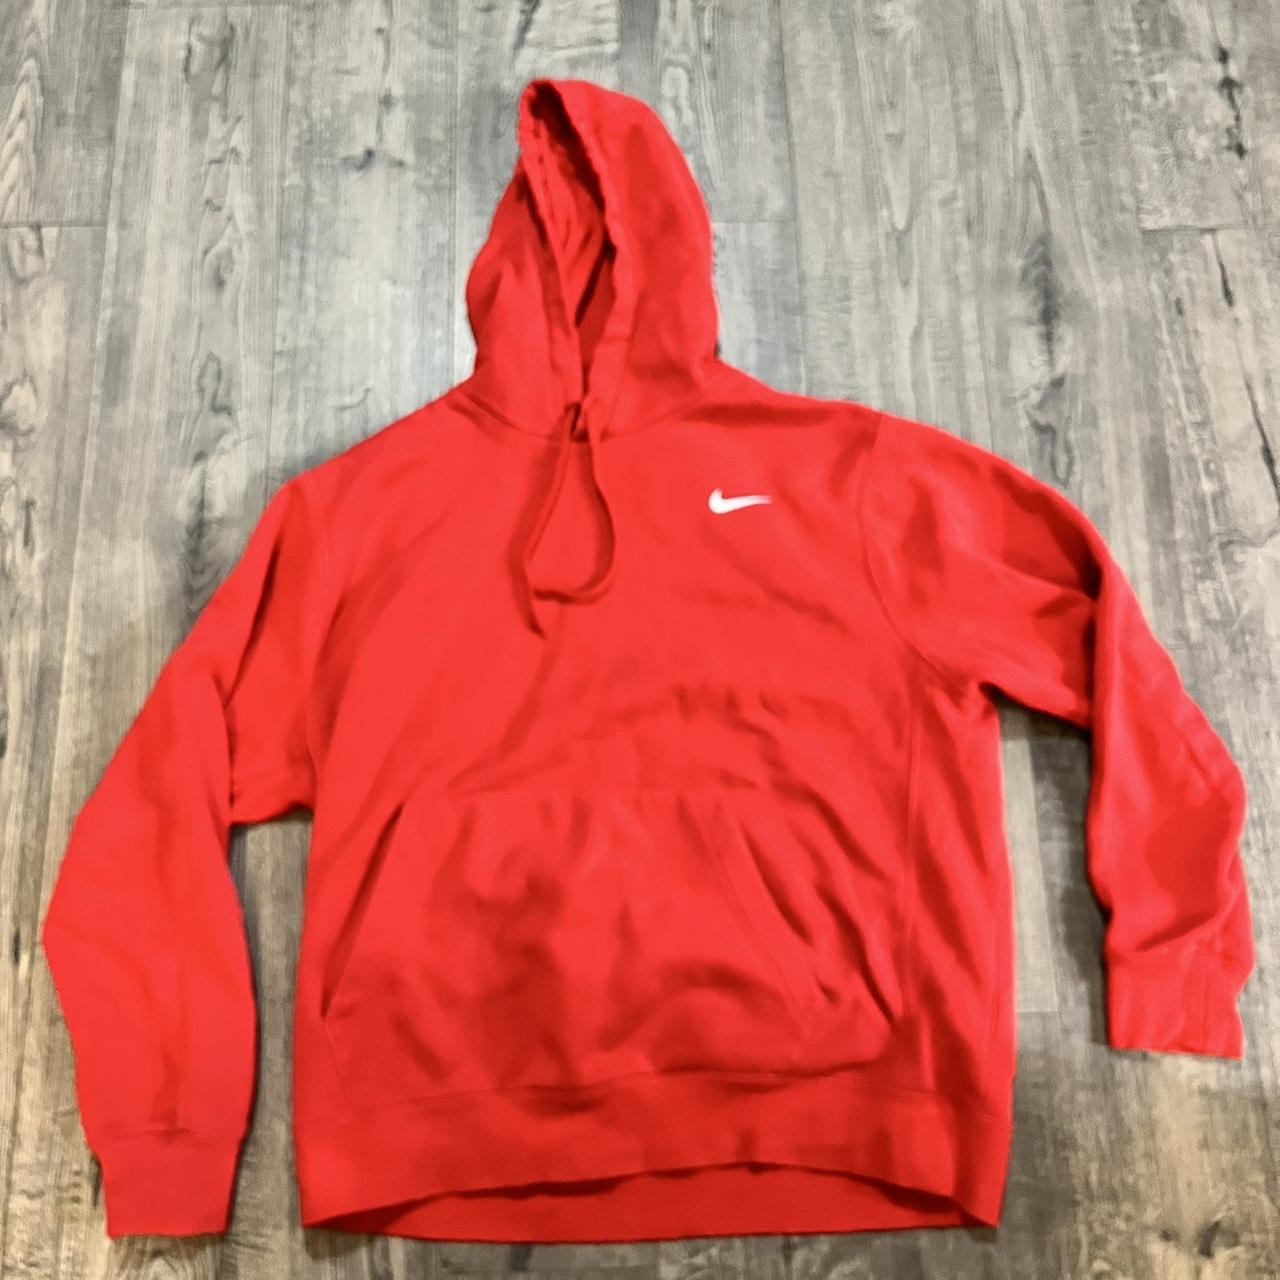 Nike Men's Red Sweatshirt